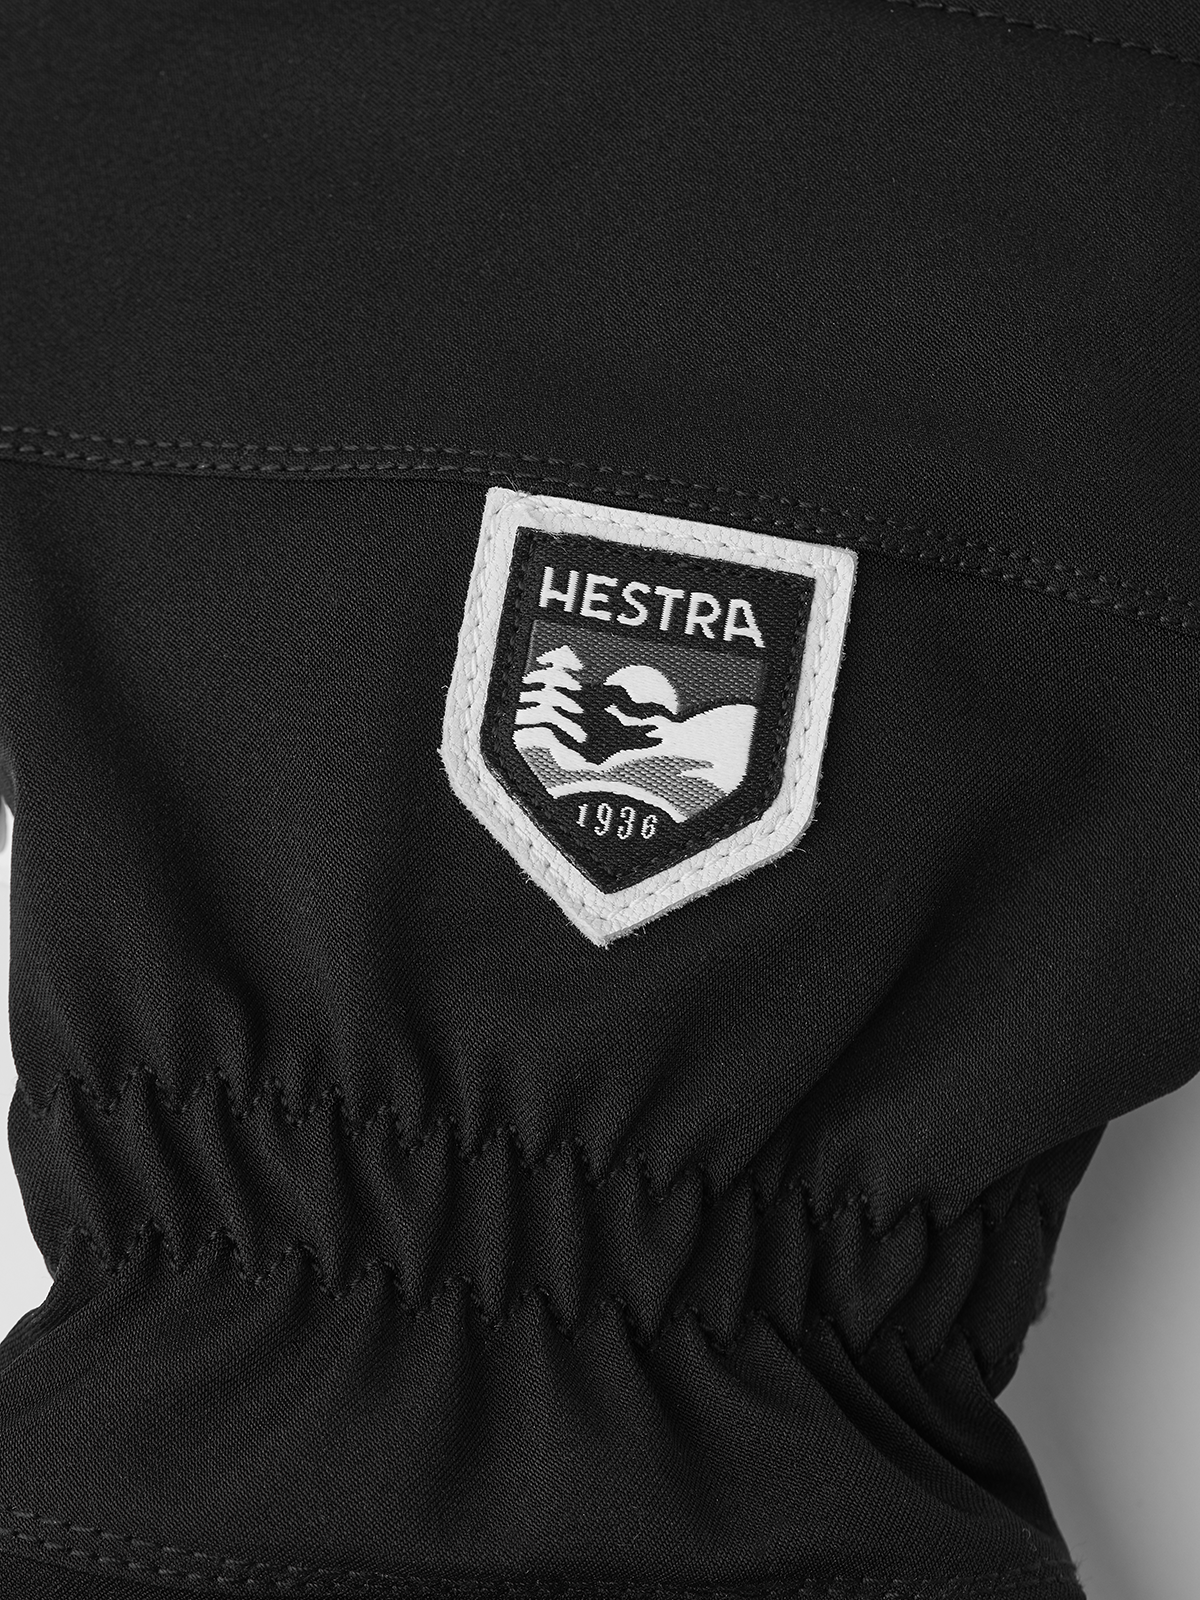 Hestra Army Leather Heli Ski GTX Gore grip technology